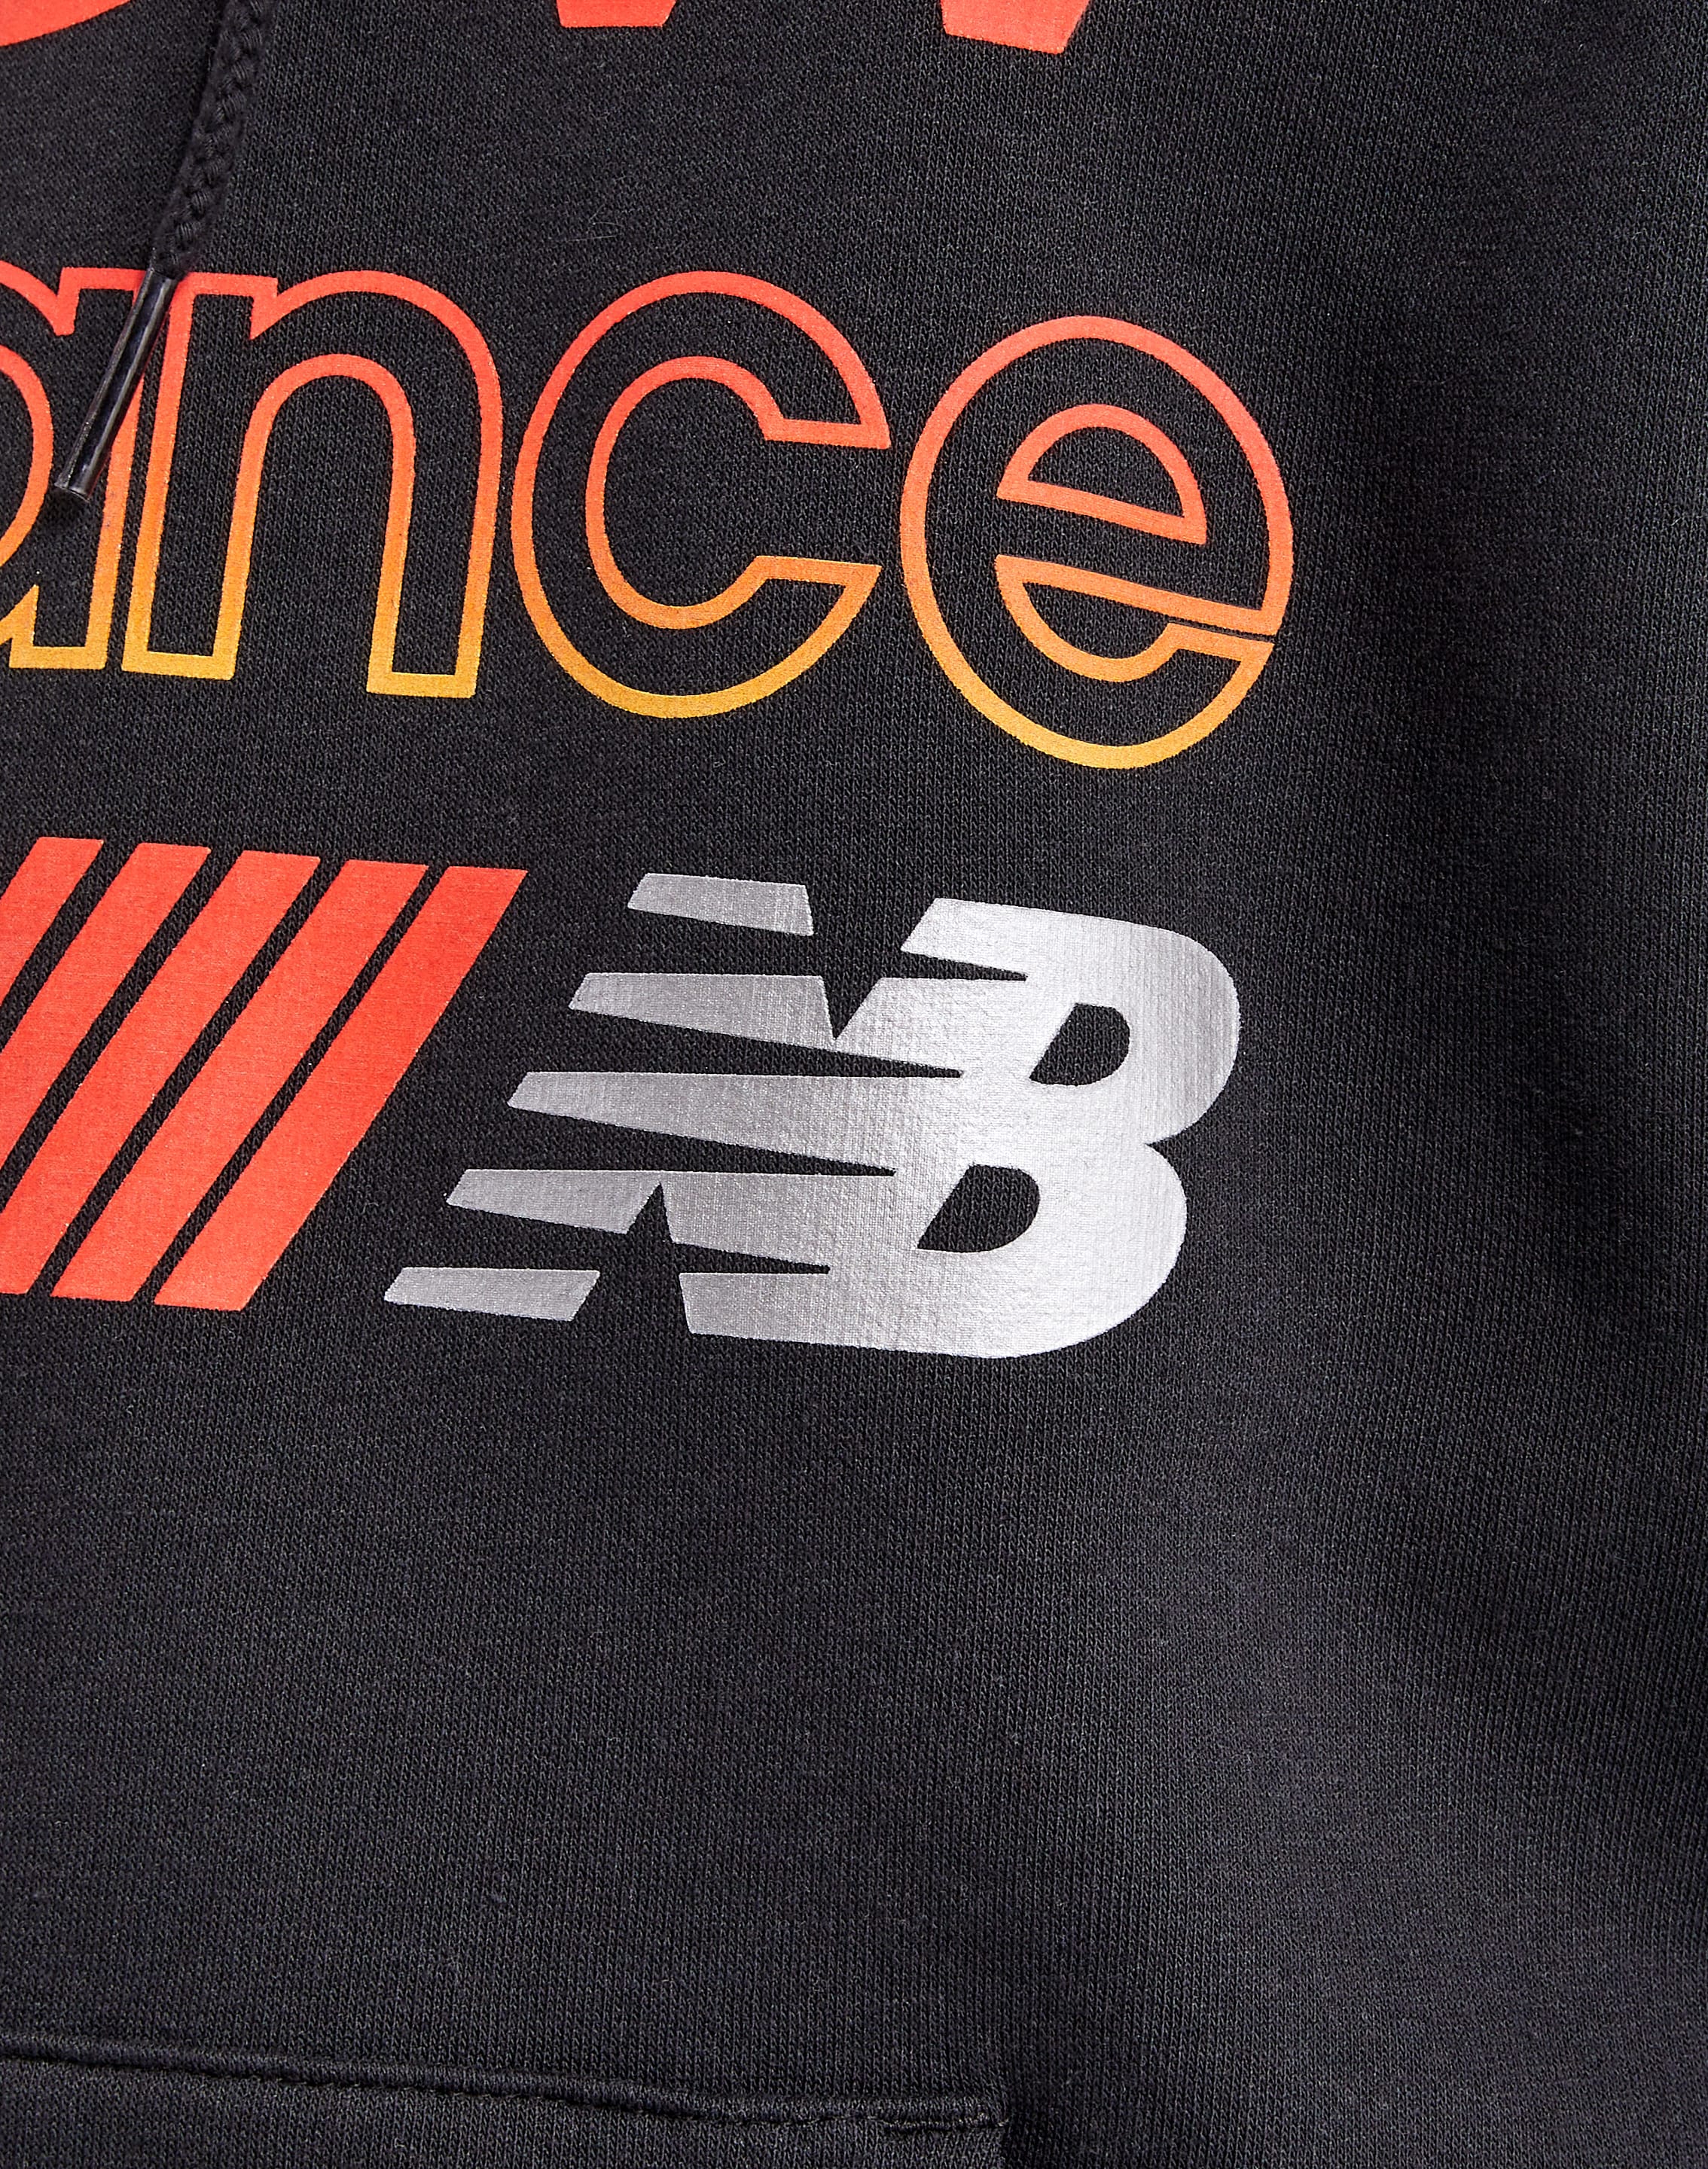 New Balance Heat Logo Pullover Hoodie